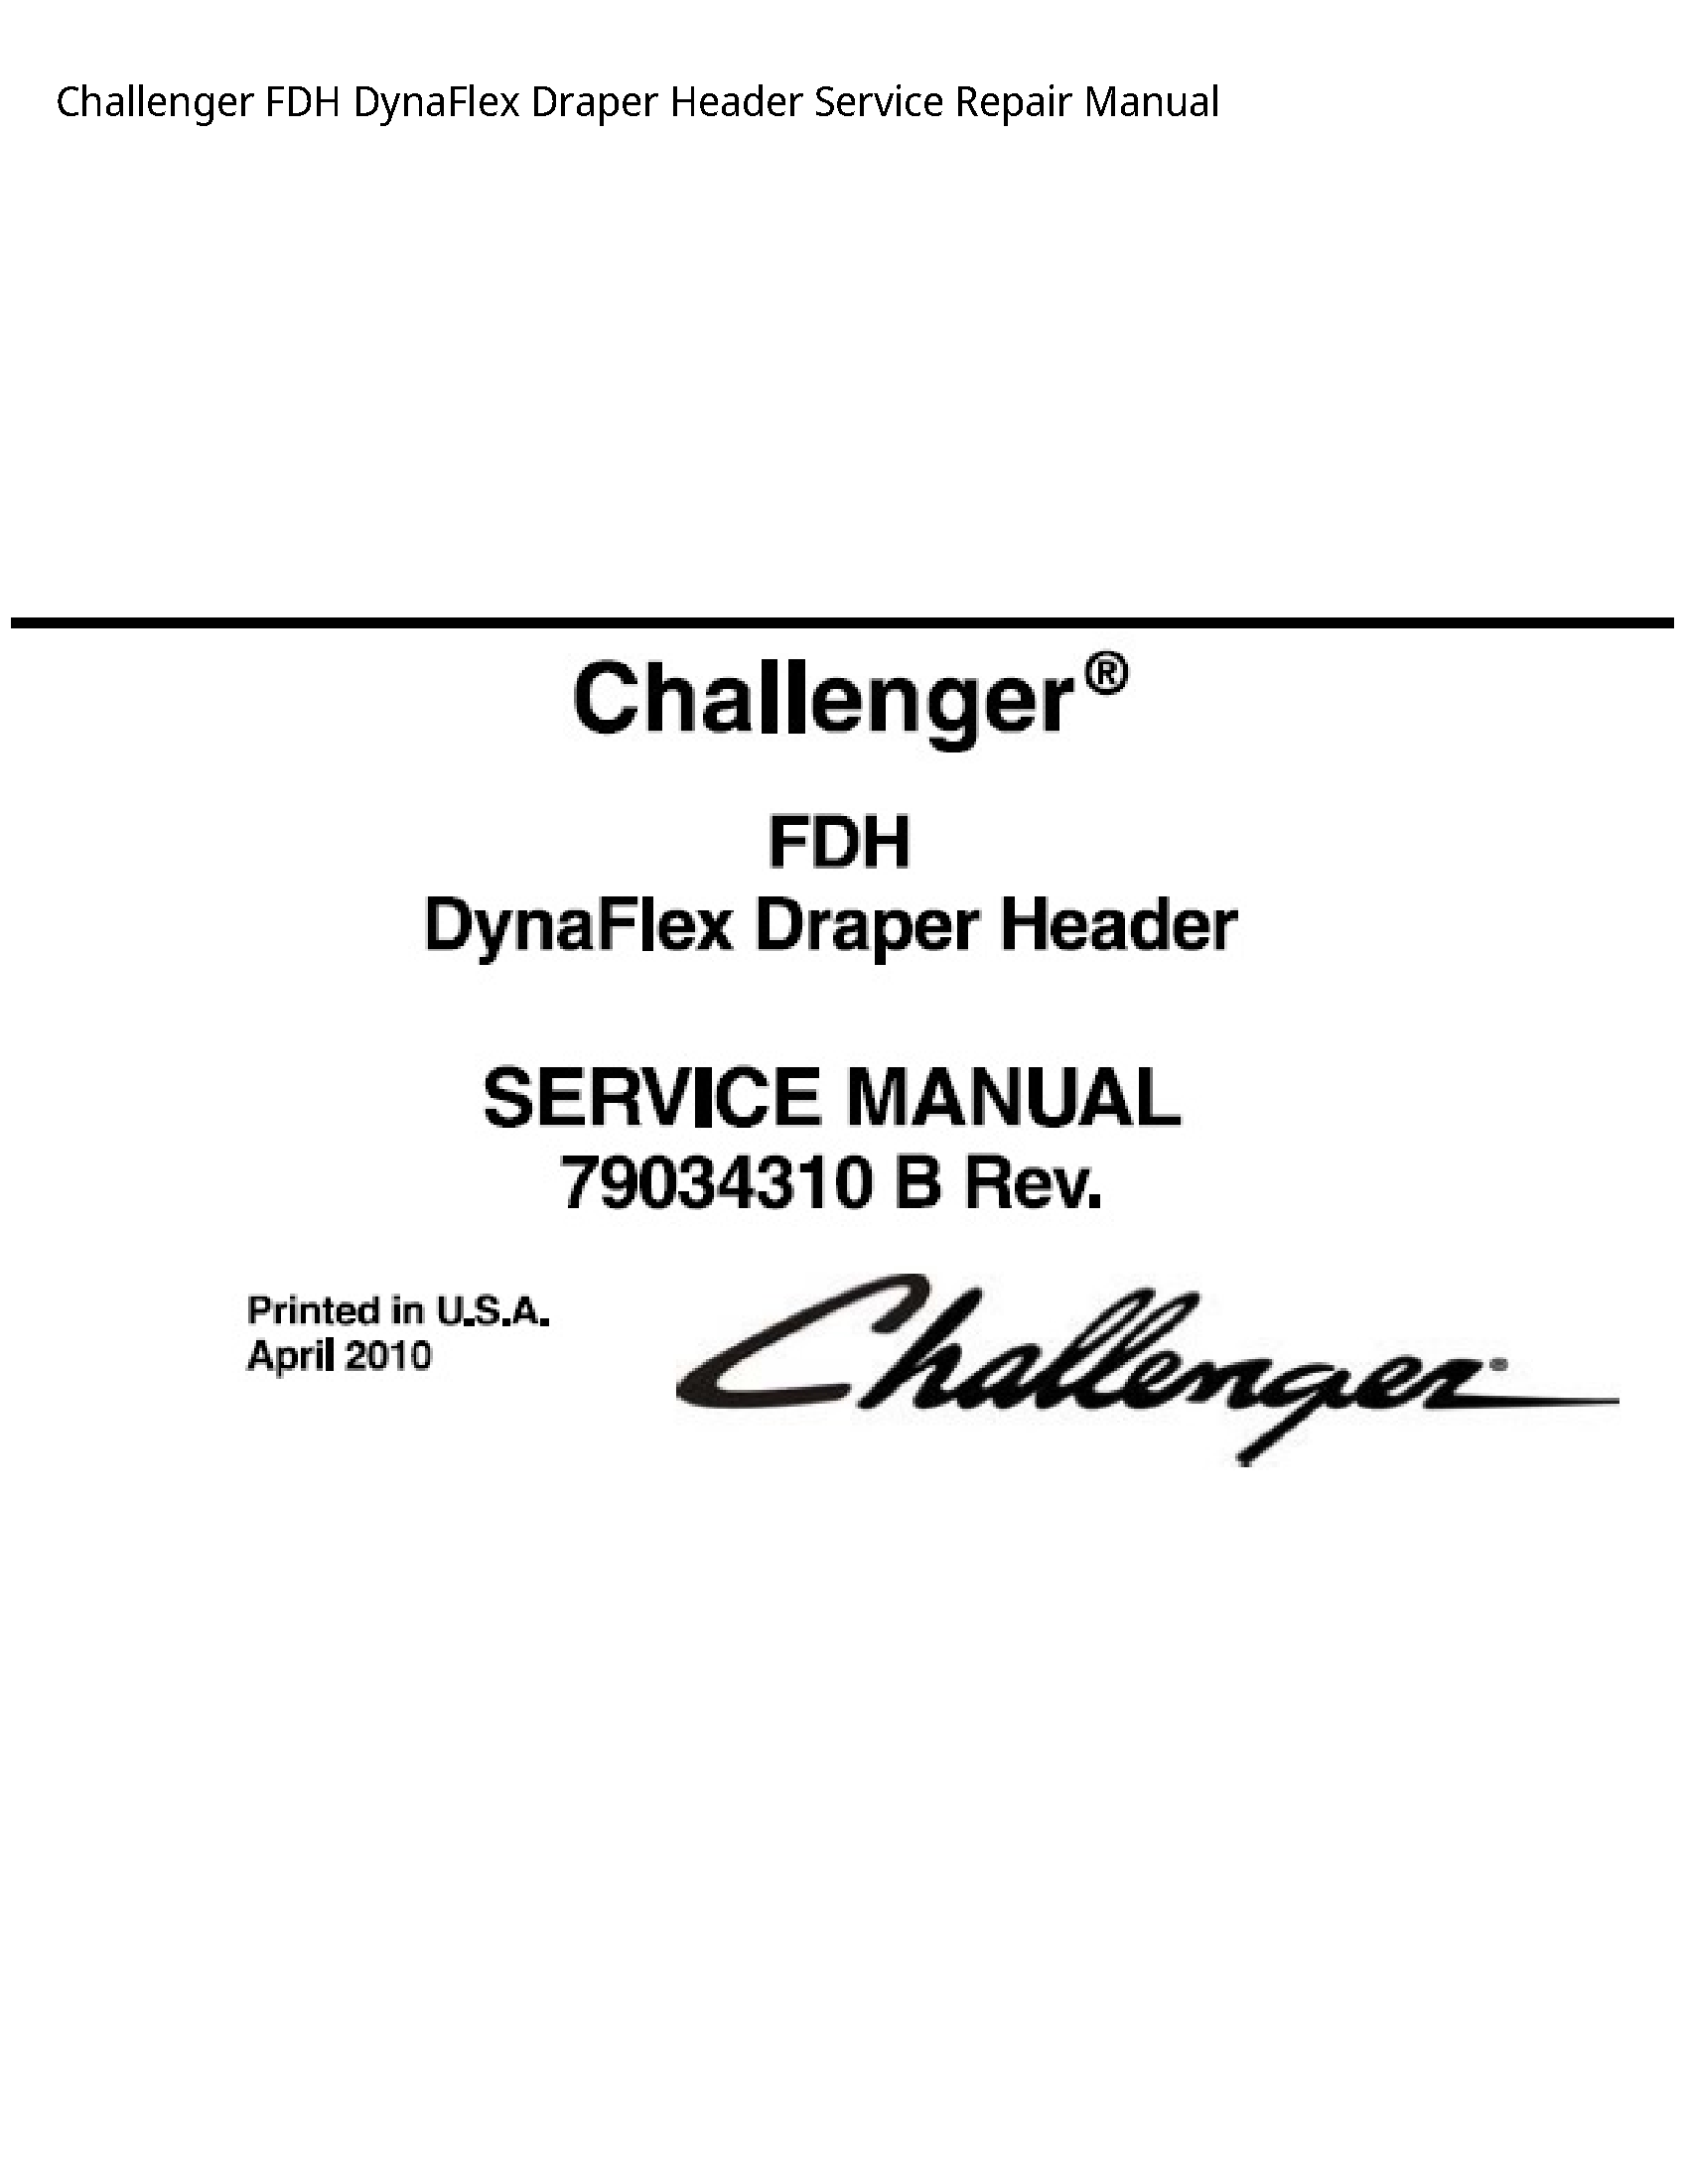 Challenger FDH DynaFlex Draper Header manual